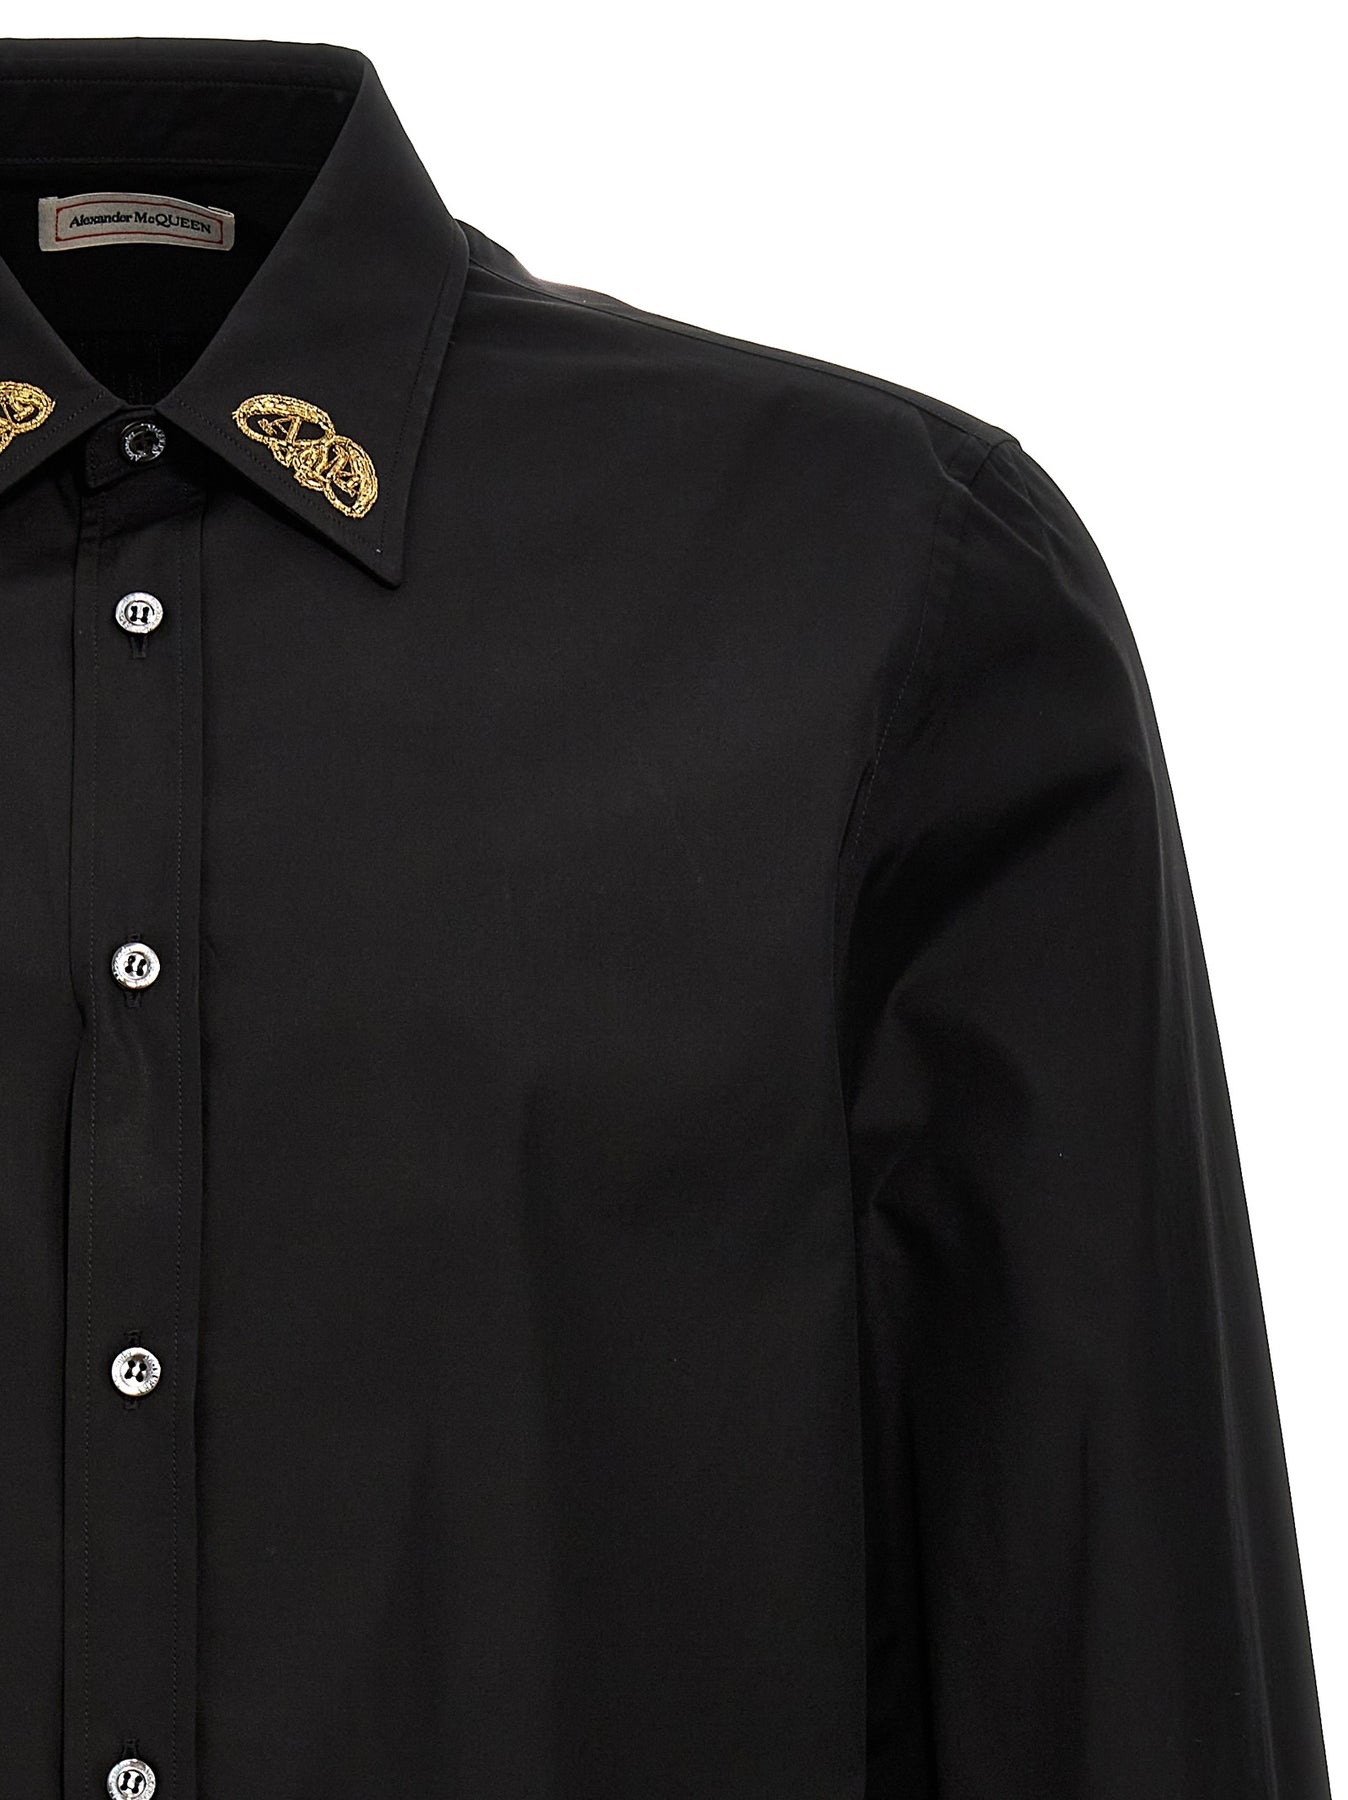 Embroidered Collar Shirt Shirt, Blouse Black - 3